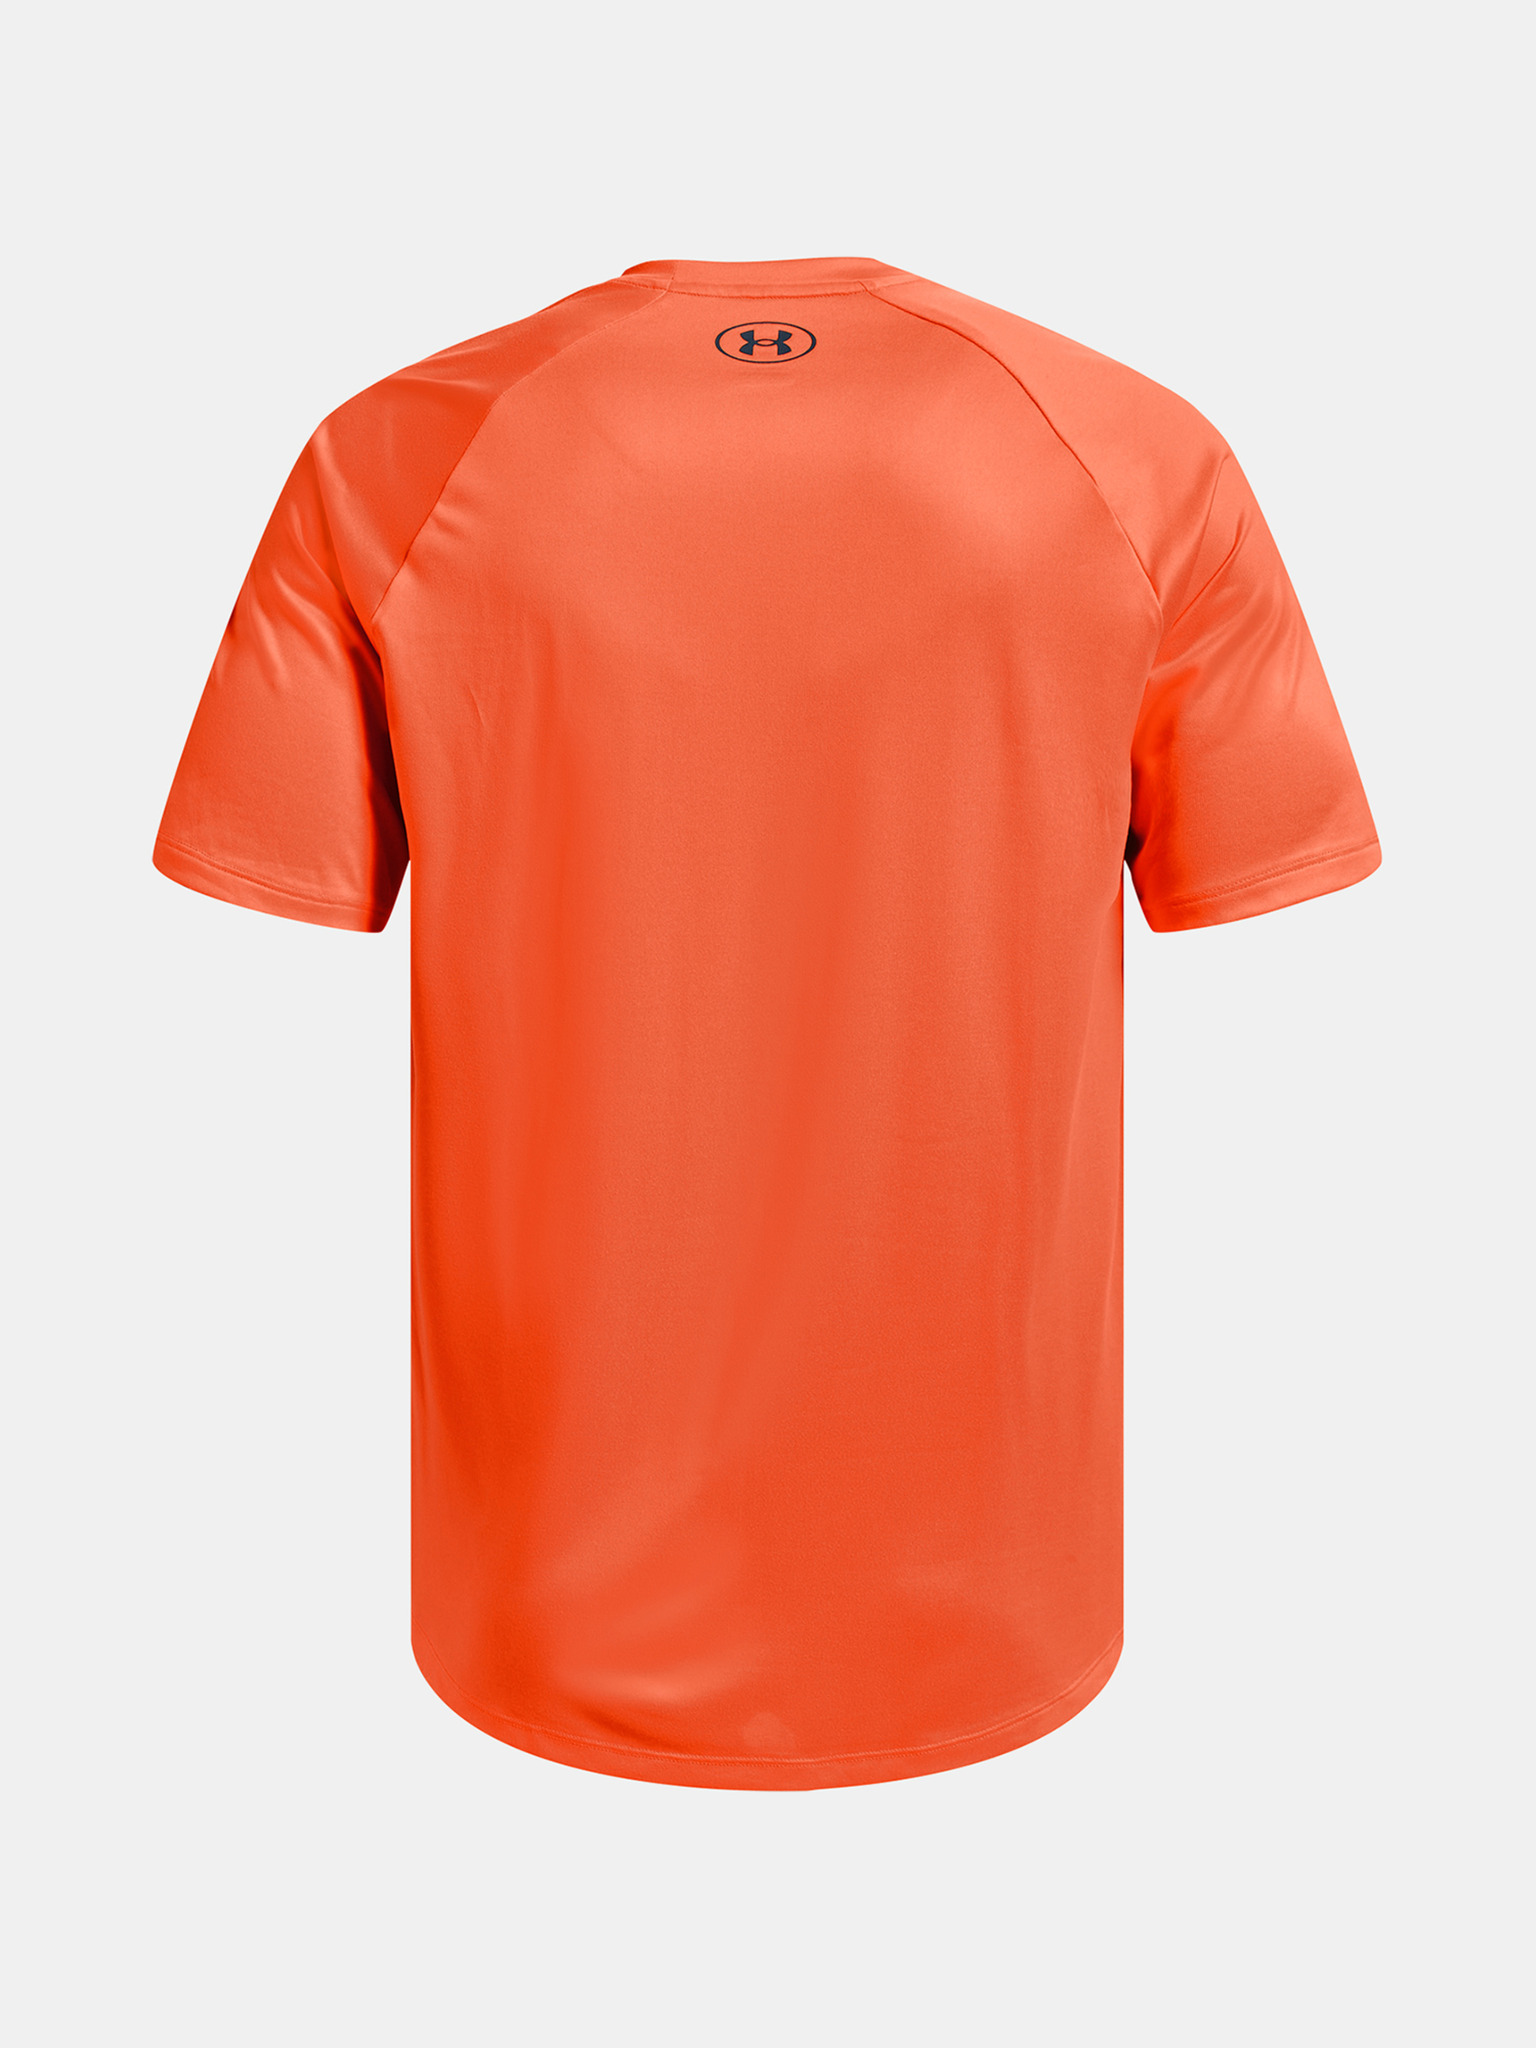 Under Armour T-shirt Tech Fade Homme Orange- JD Sports France